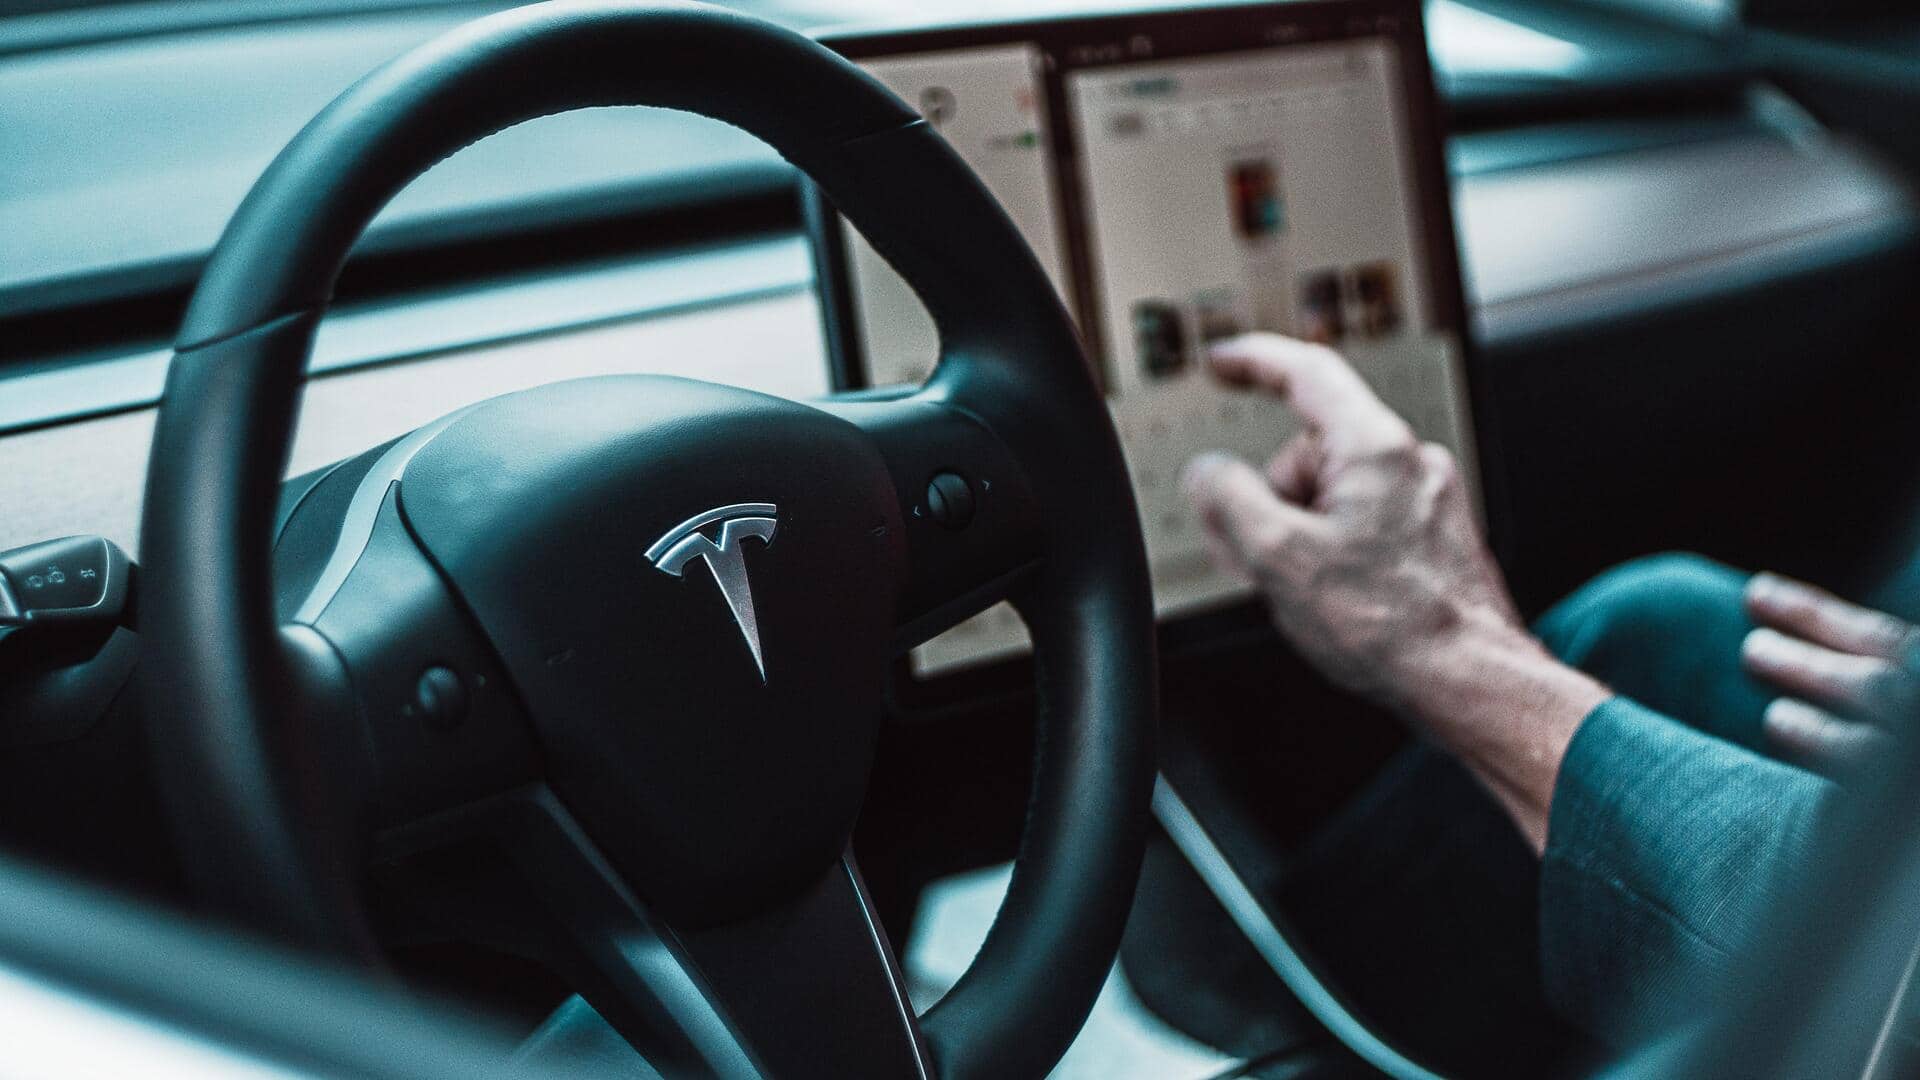 Tesla is using LiDAR sensors to improve its self-driving tech